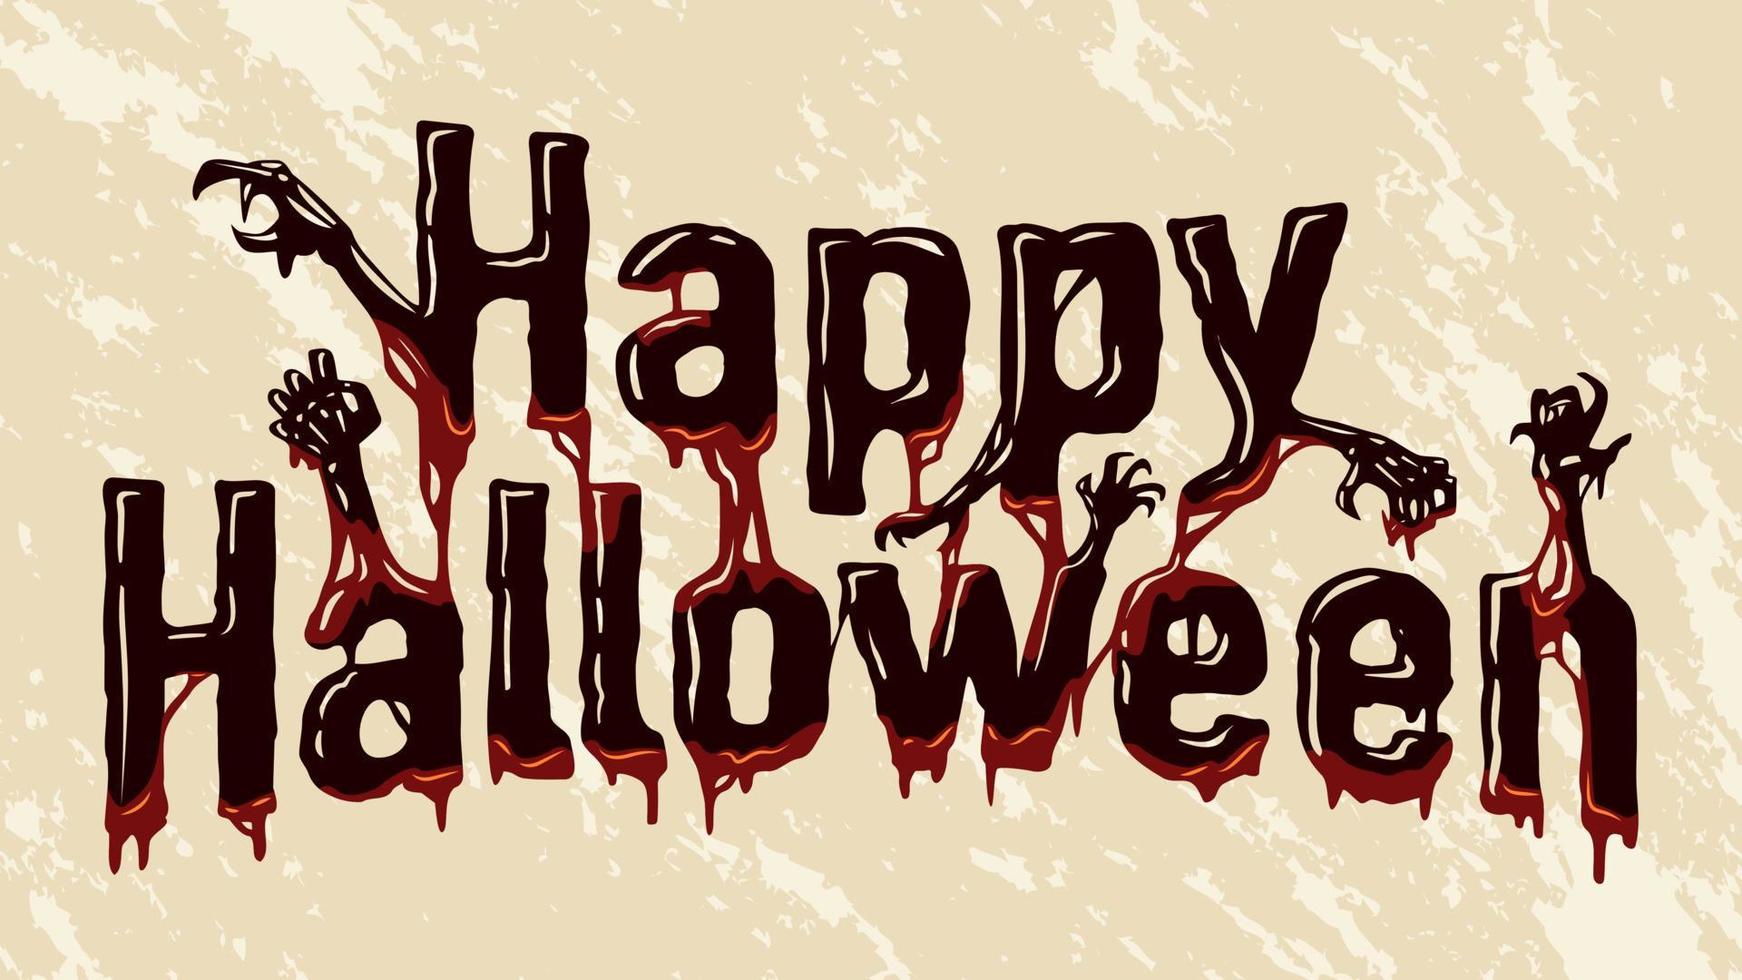 glückliches Halloween-Textdesign, Vektor